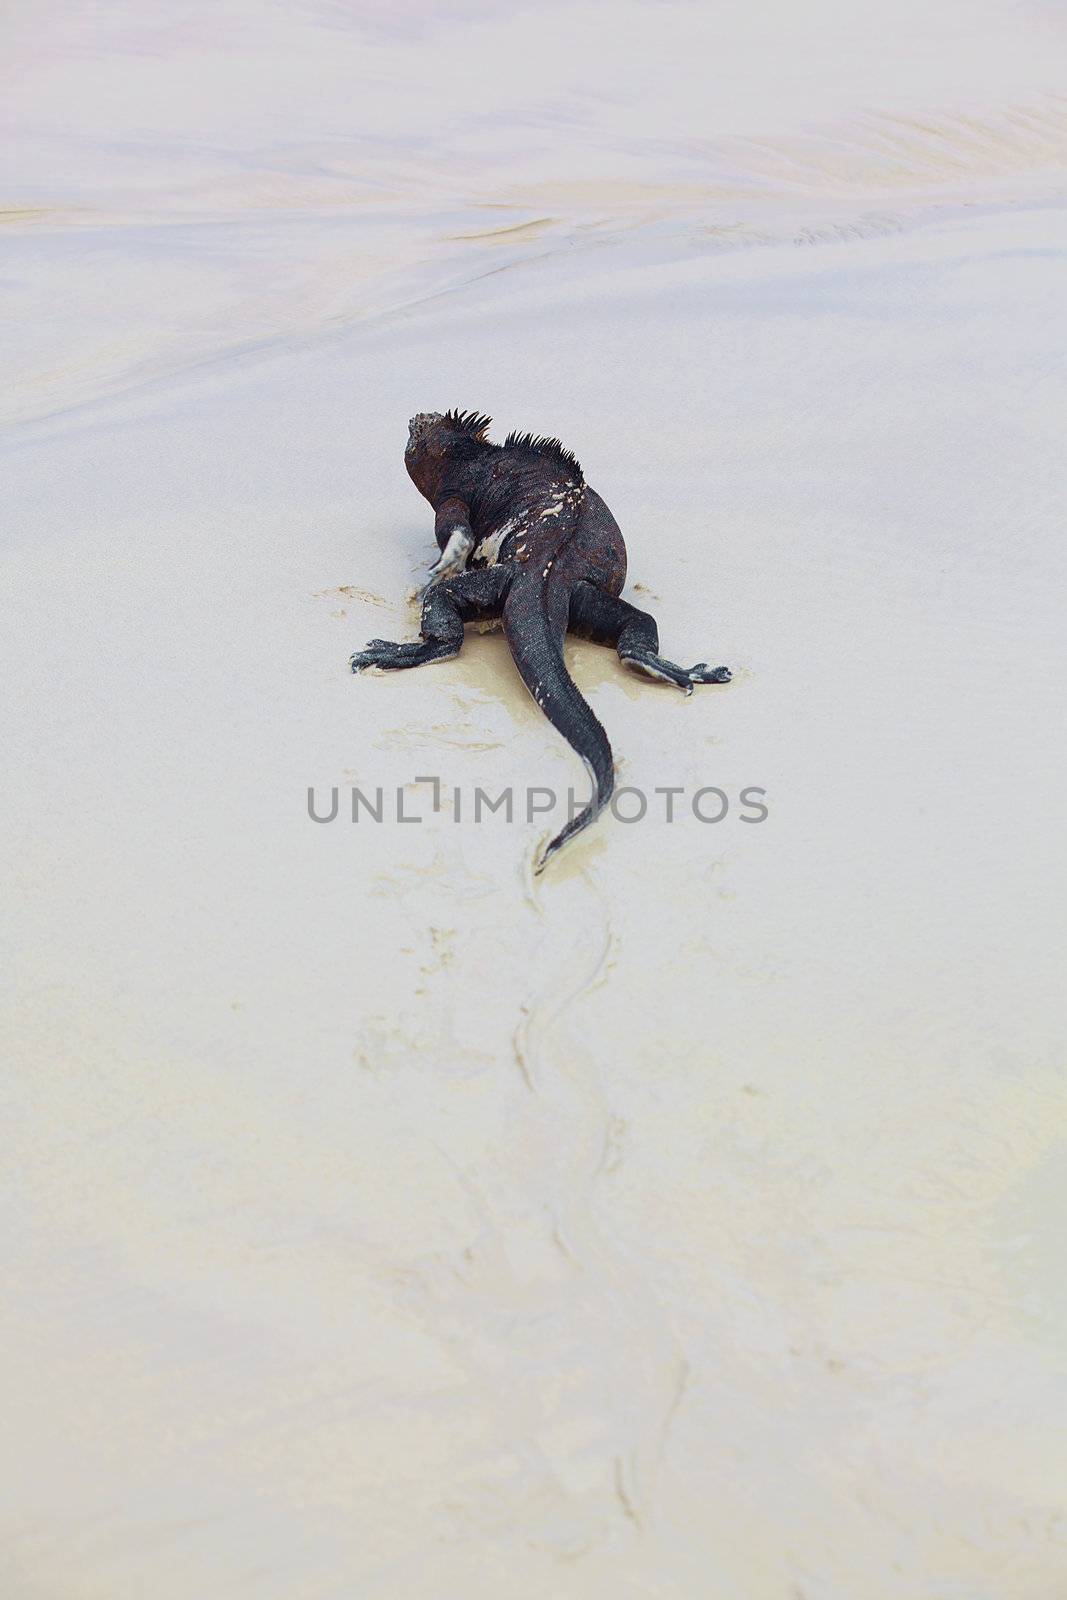 Galapagos marine Iguana by kjorgen